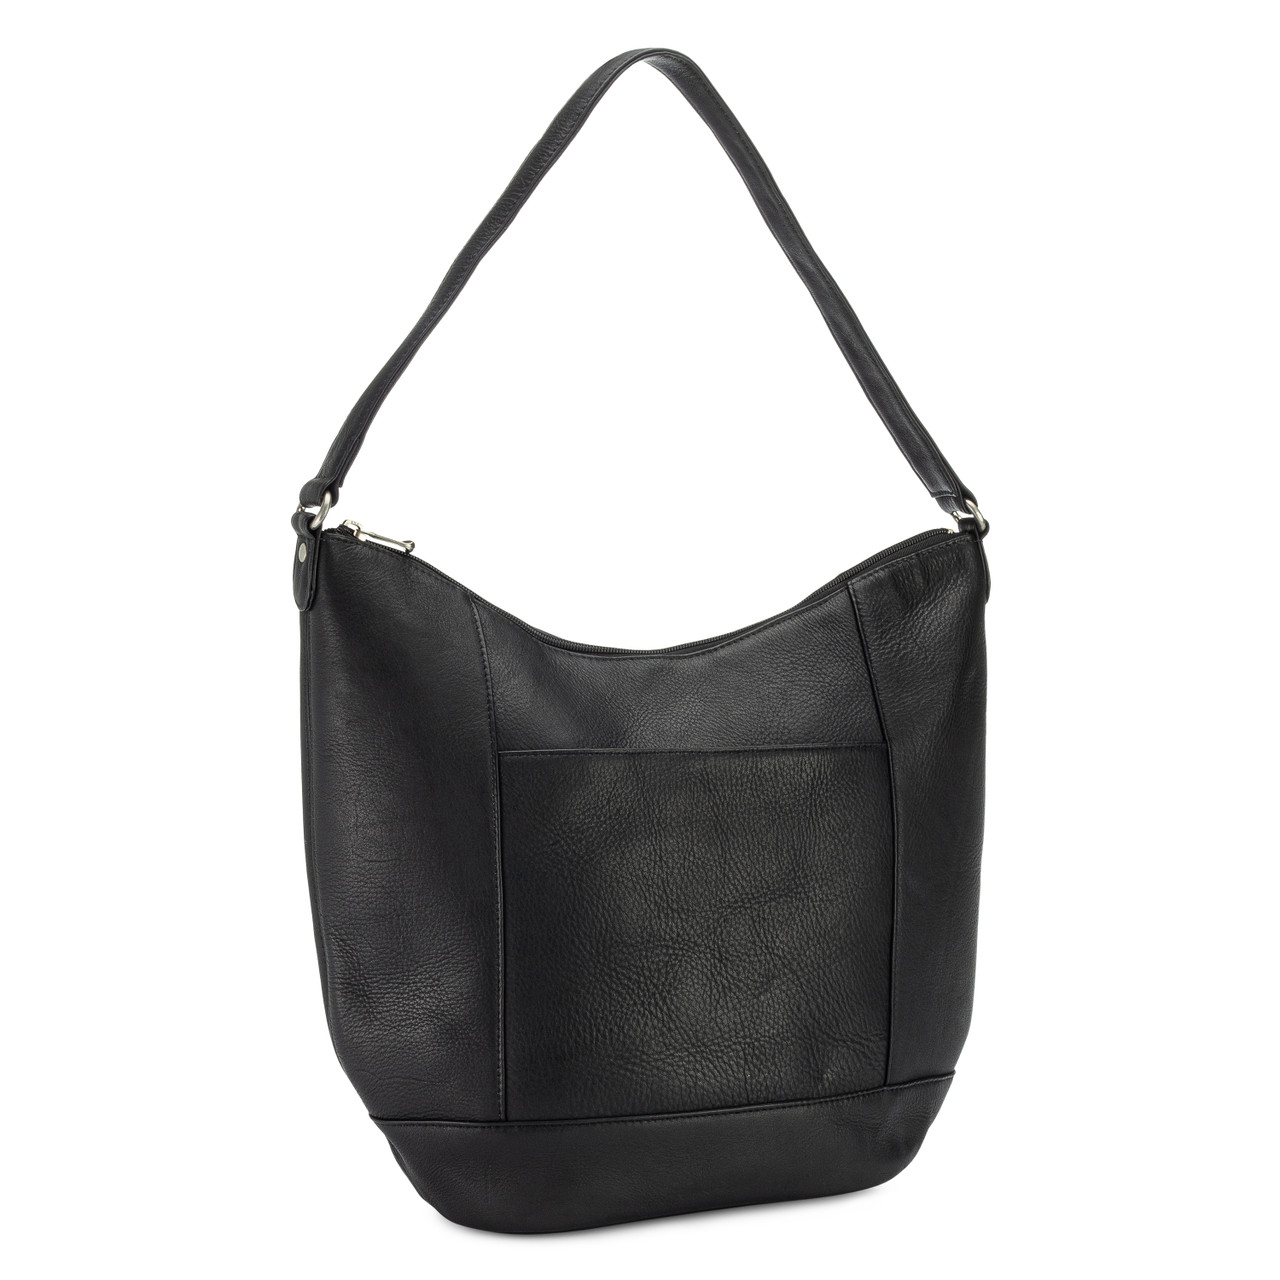 A|X Large Gray Hobo Purse | Hobo purse, Armani exchange bags, Hobo style